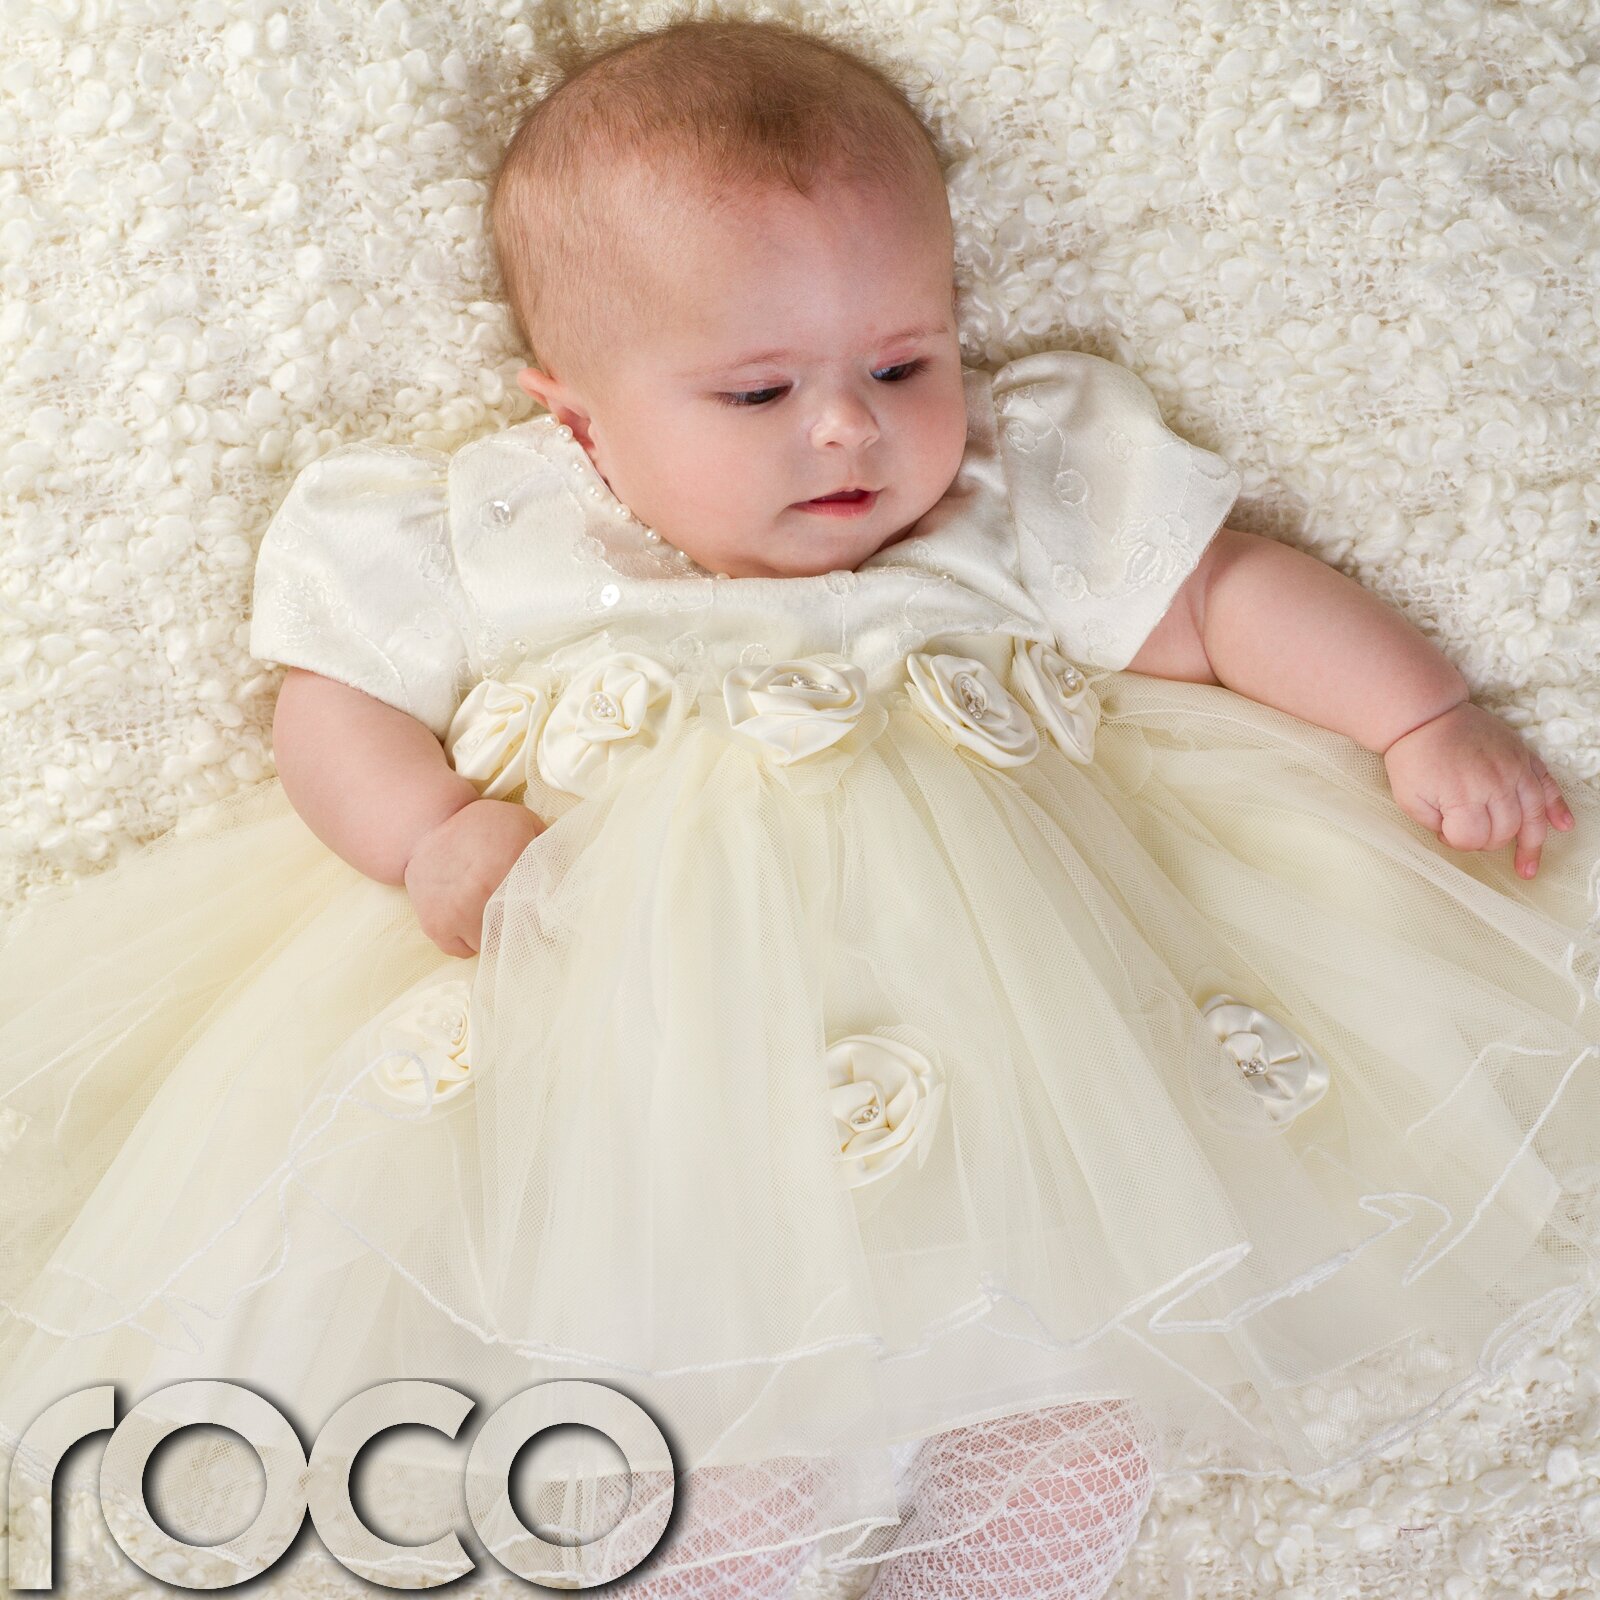 Wedding dresses for baby girl Photo - 3